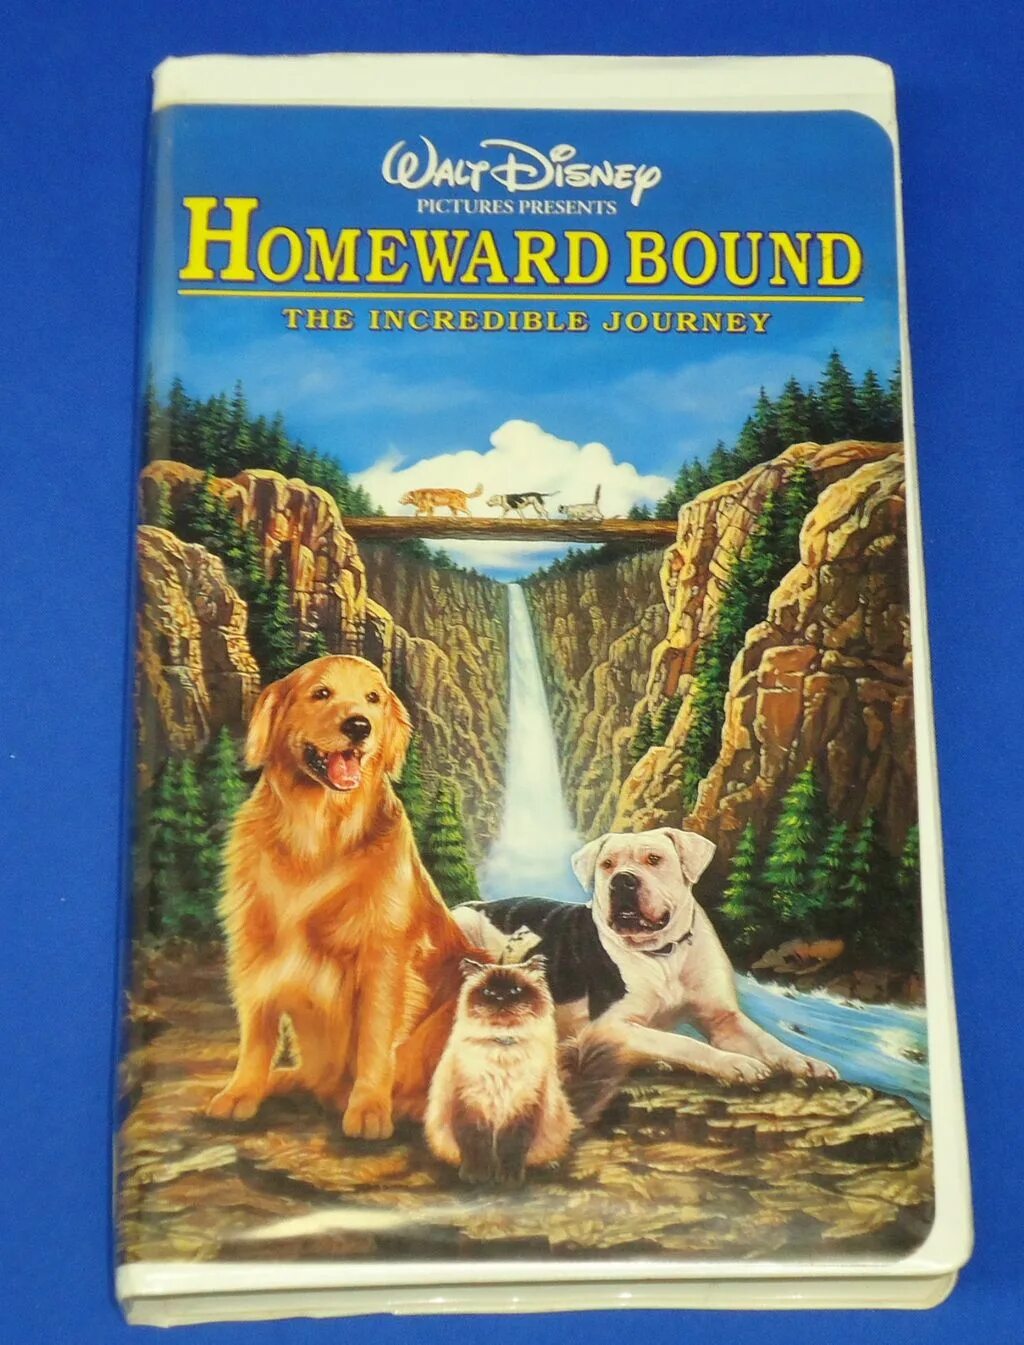 Homeward journey. Homeward bound: the incredible Journey. The incredible Journey book. Homeward bound: the incredible Journey 1993 poster.